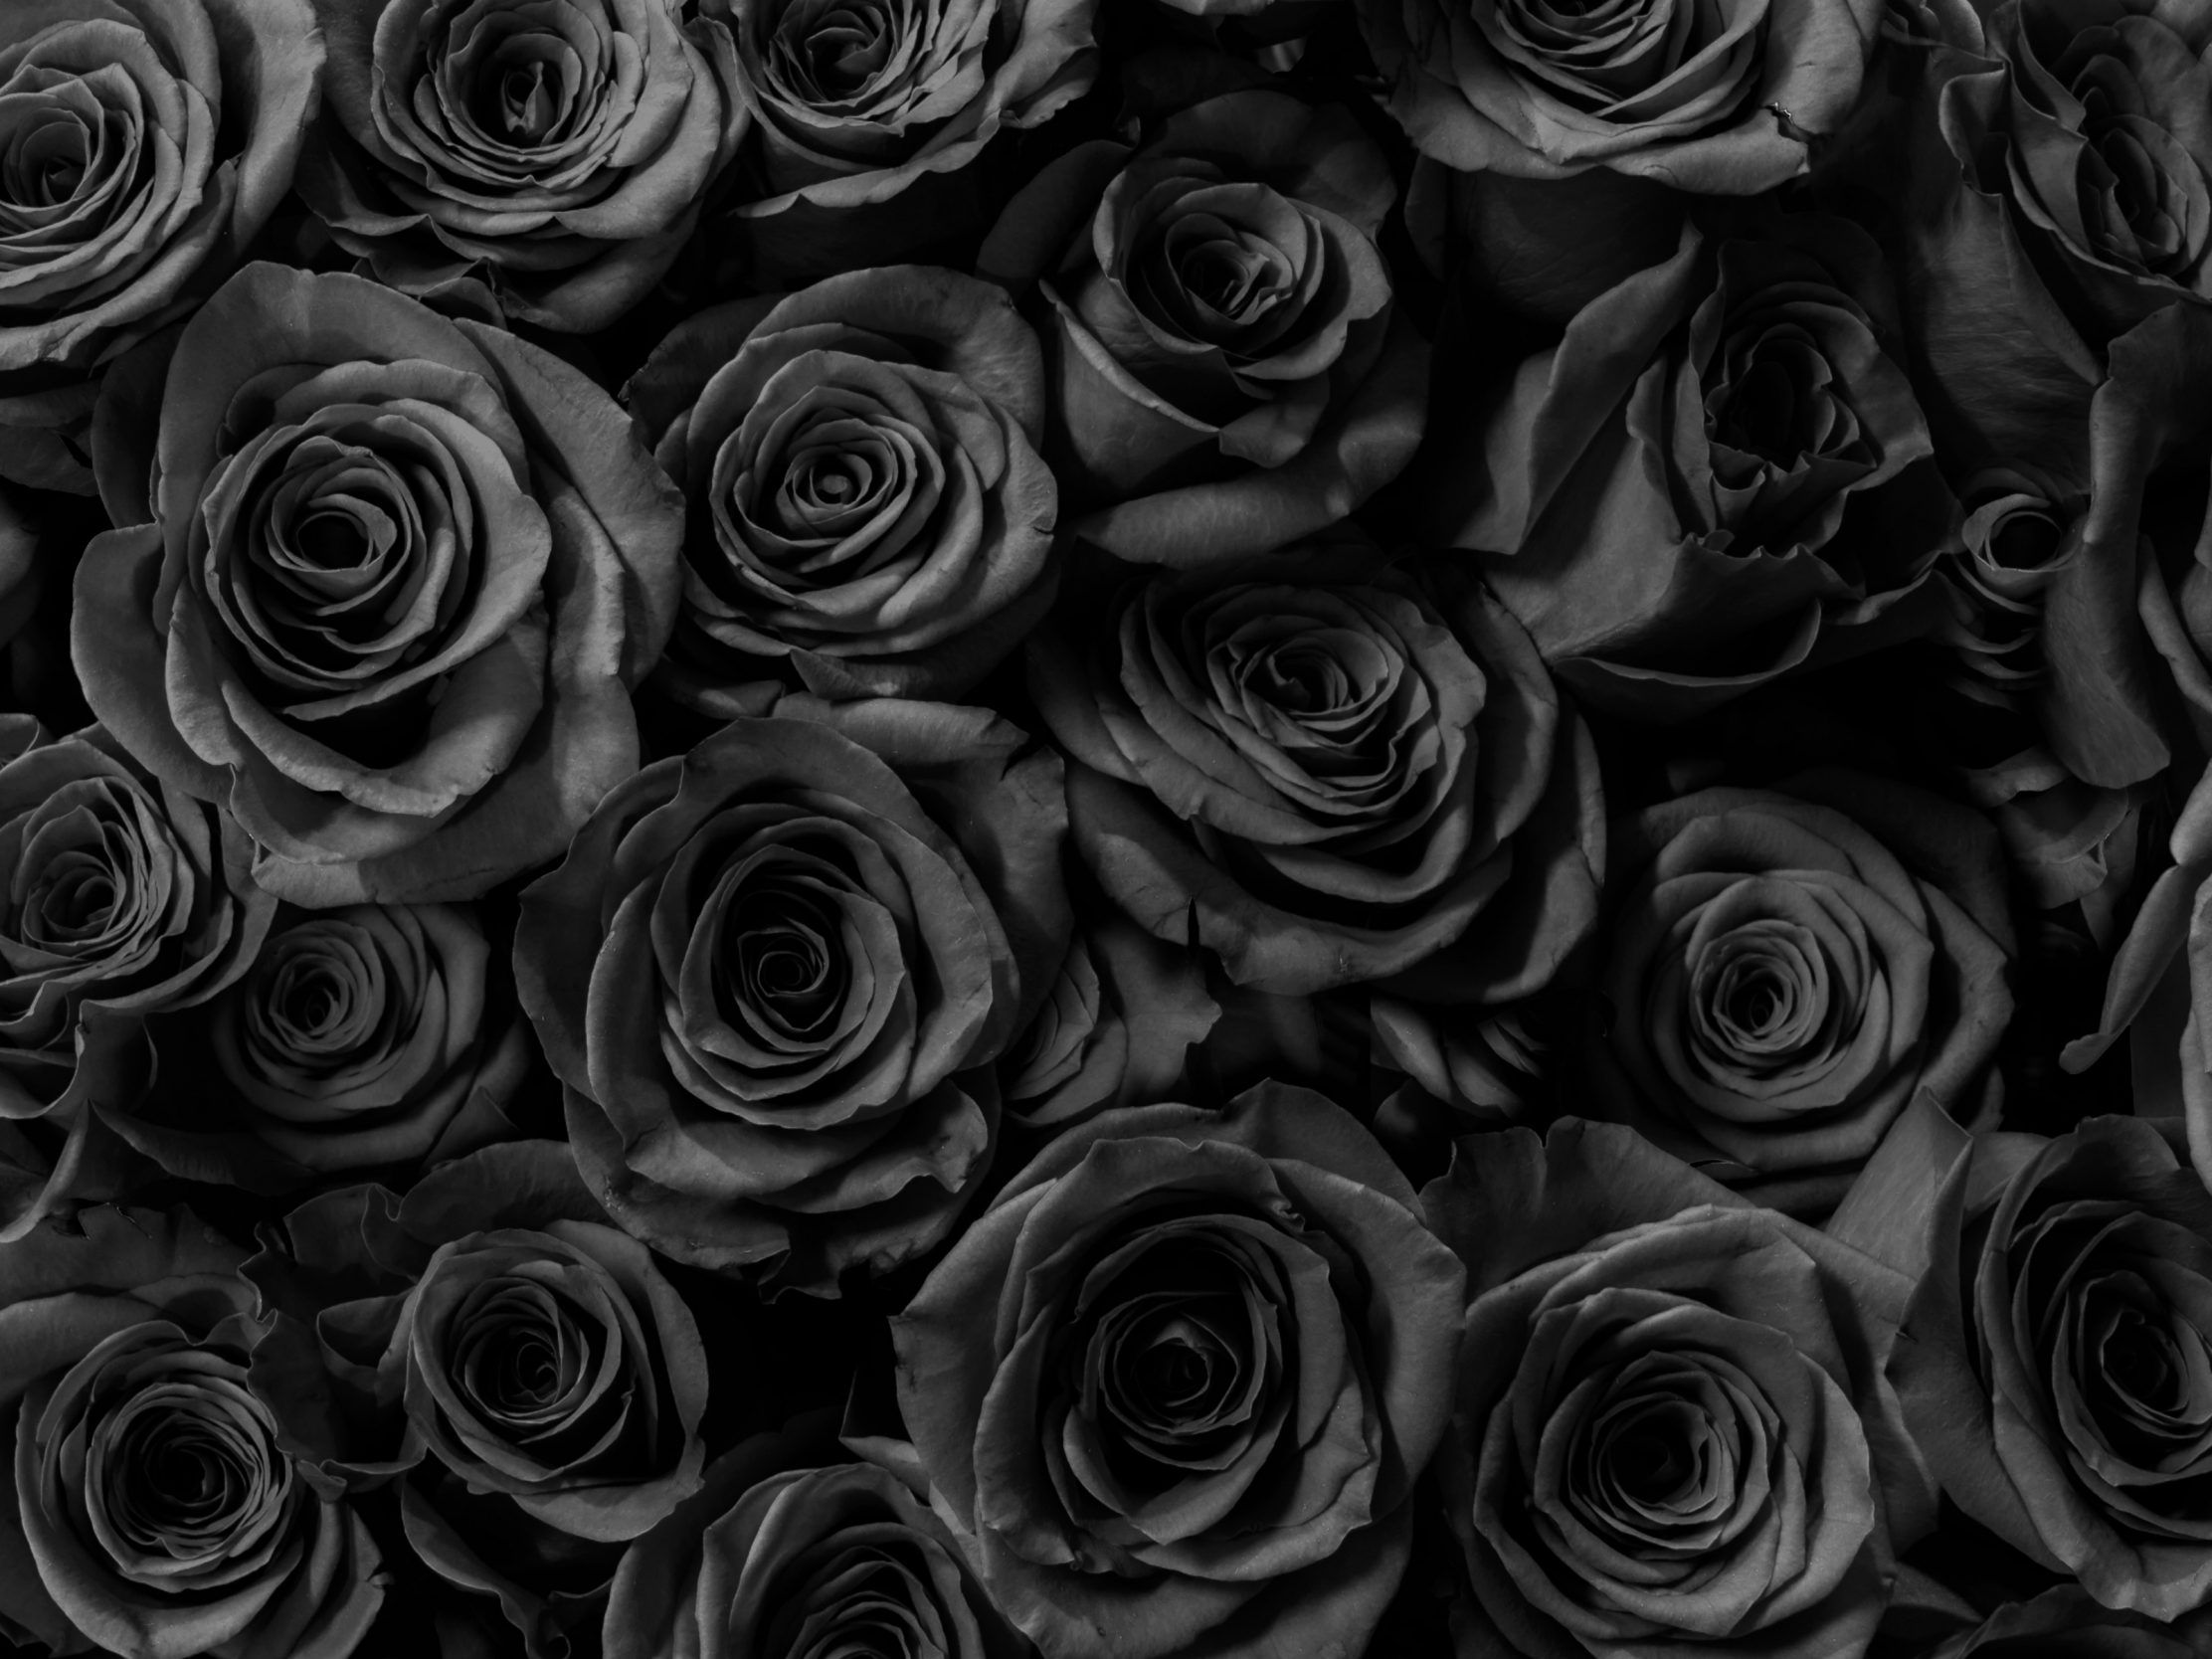 2224x1668 iPad Pro wallpapers Black Roses Gift Anniversary iPad Wallpaper 2224x1668 pixels resolution